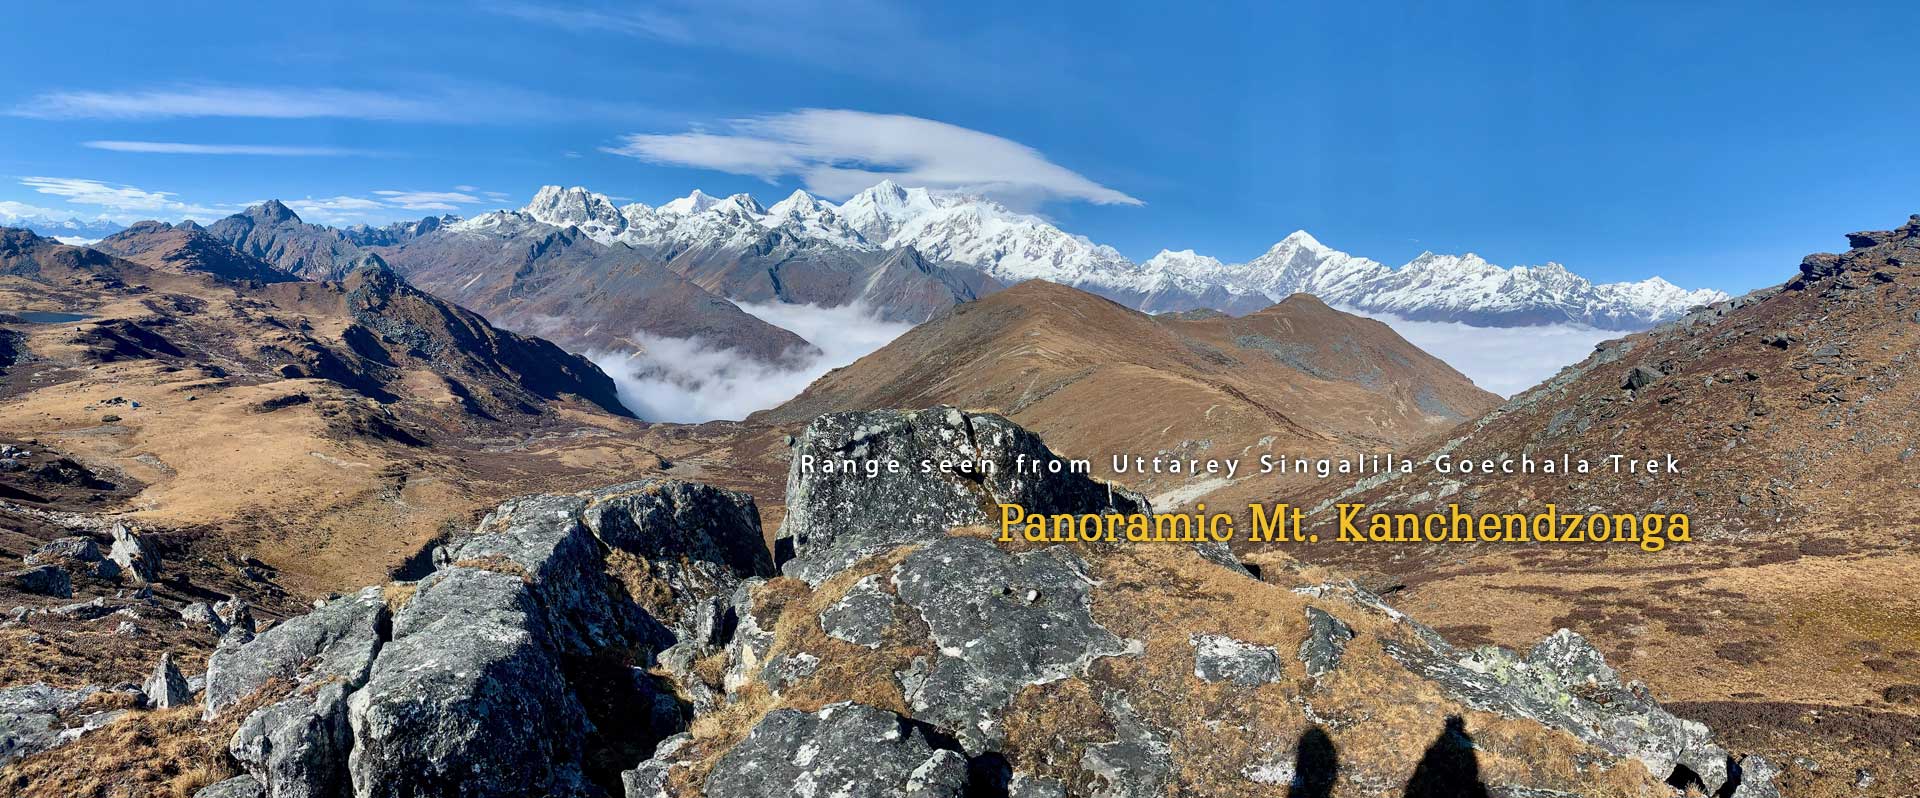 Darjeeling Mountain Tours & Treks